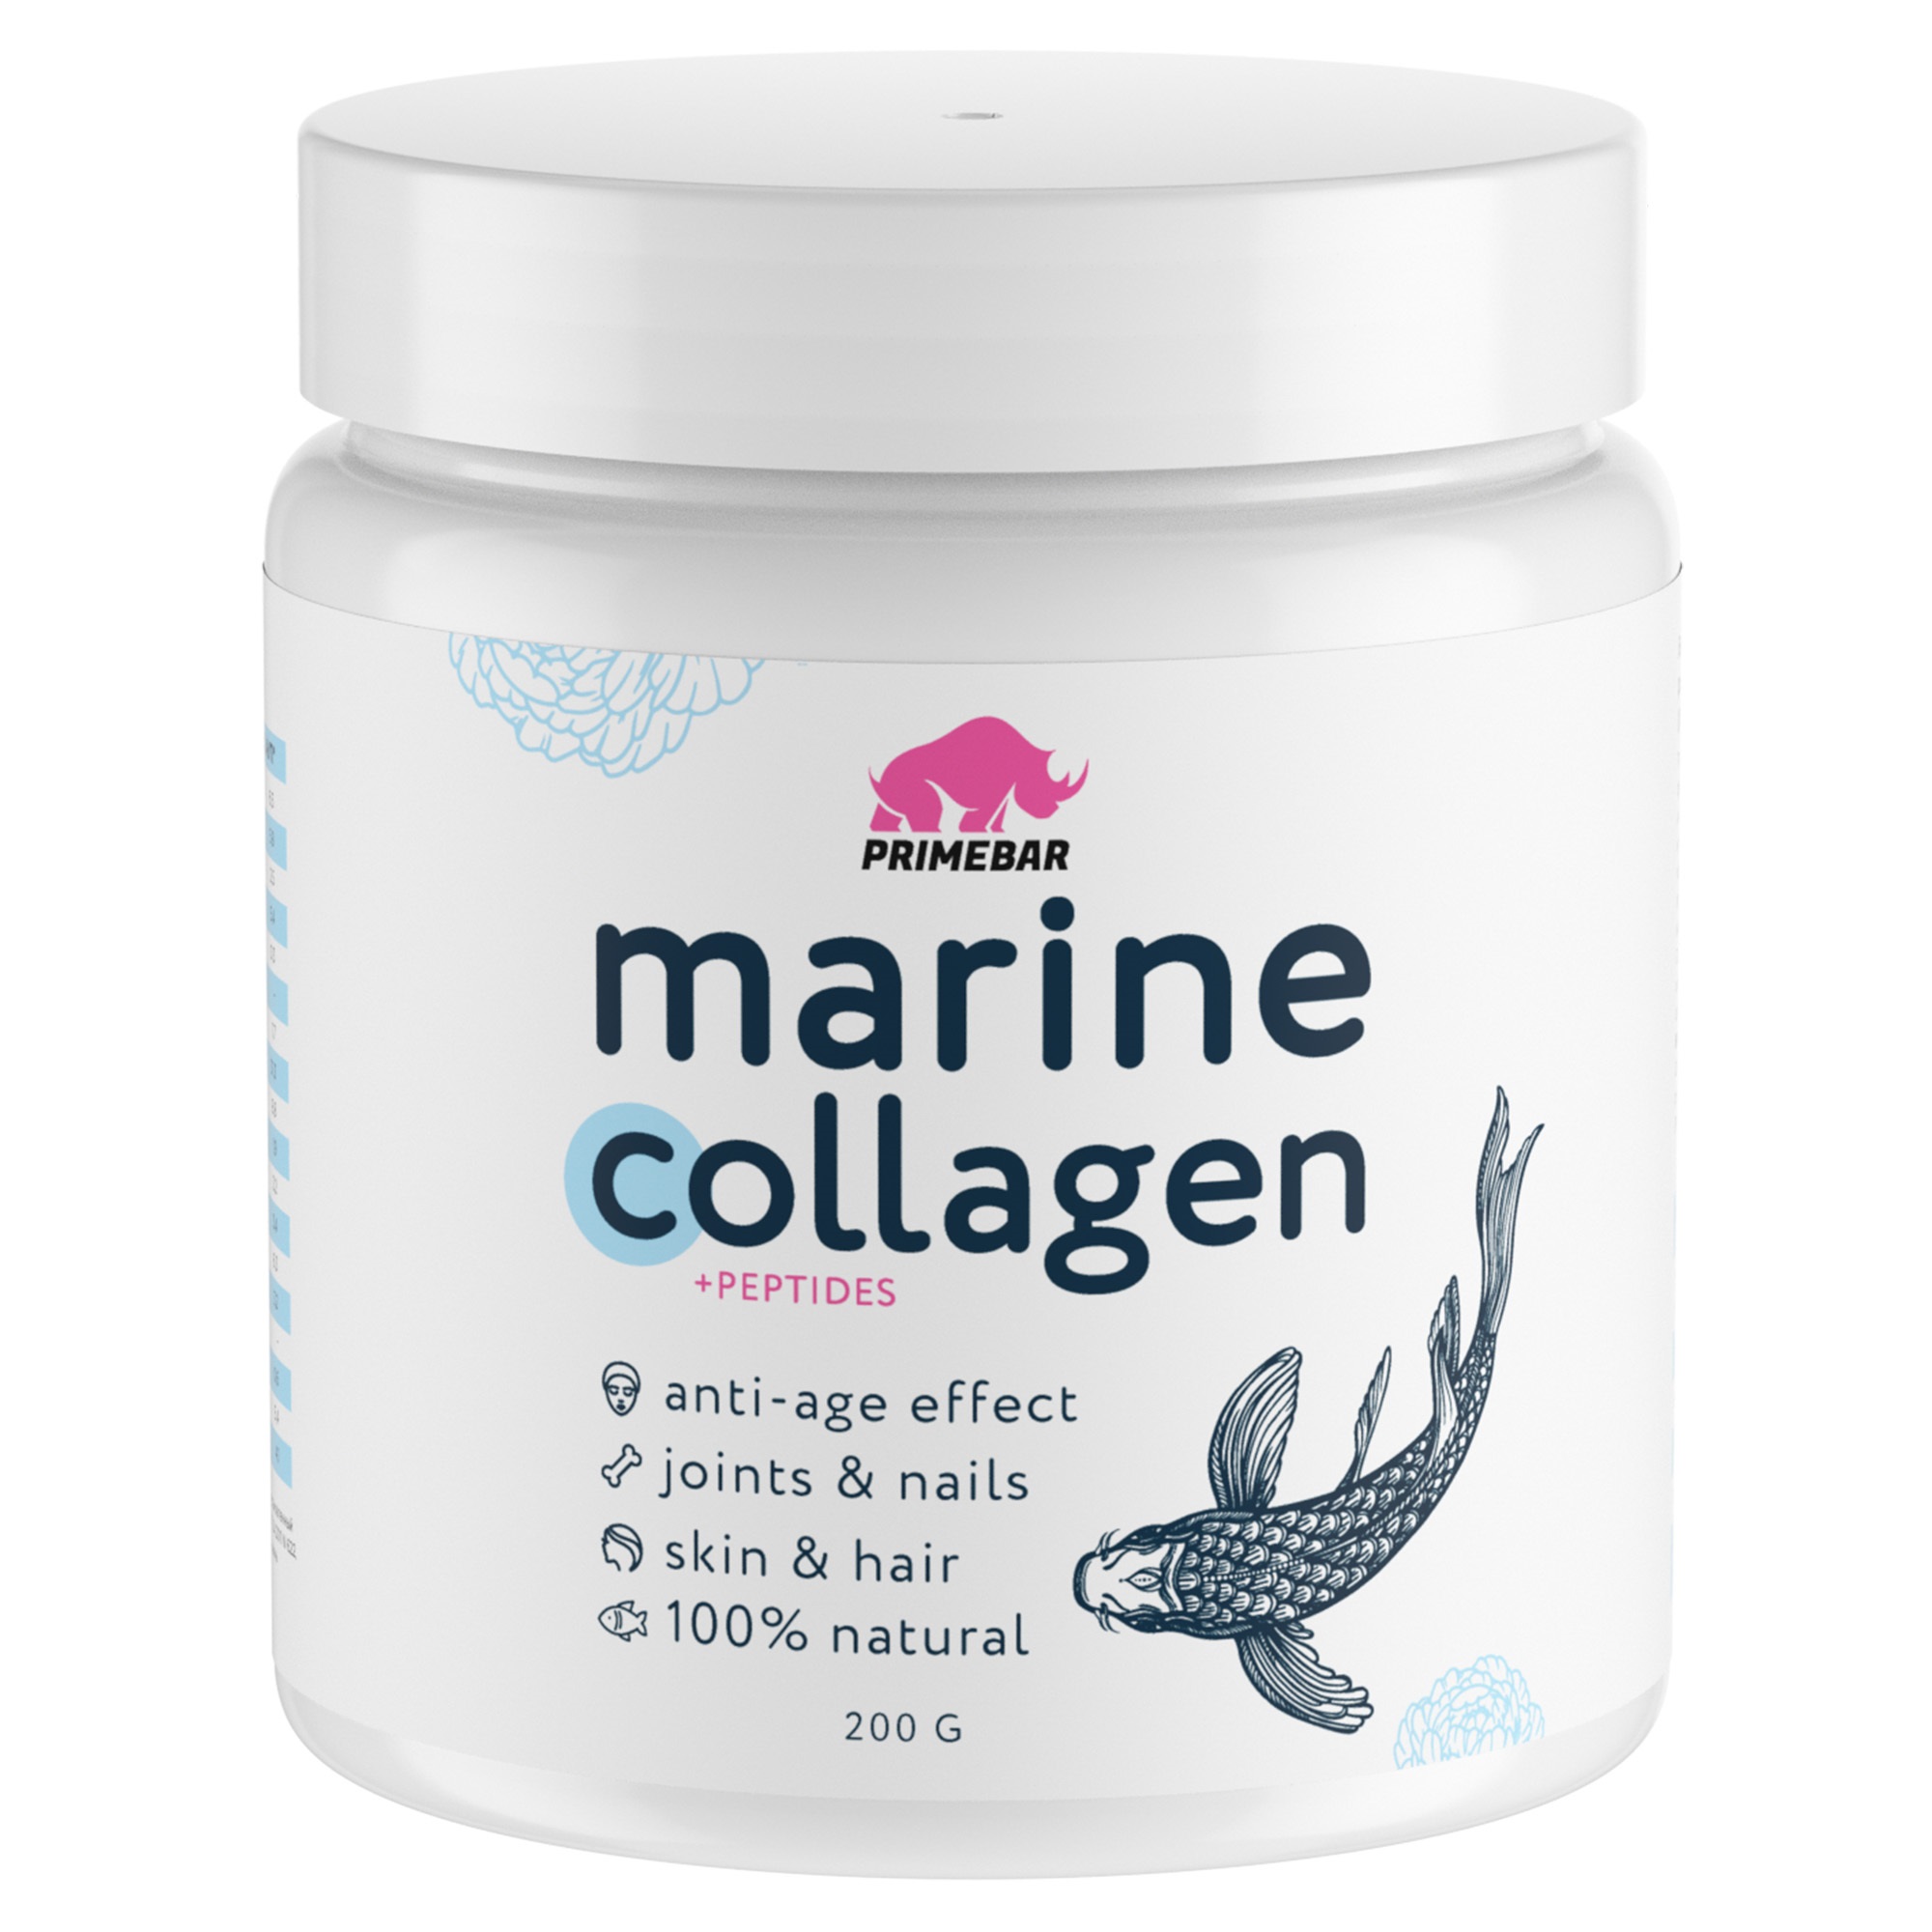 Коллаген морской купить цена. Коллаген Marine Collagen Peptides. Primebar коллаген порошок. Морской рыбный коллаген Marine Collagen. Primebar коллаген рыбный порошок.